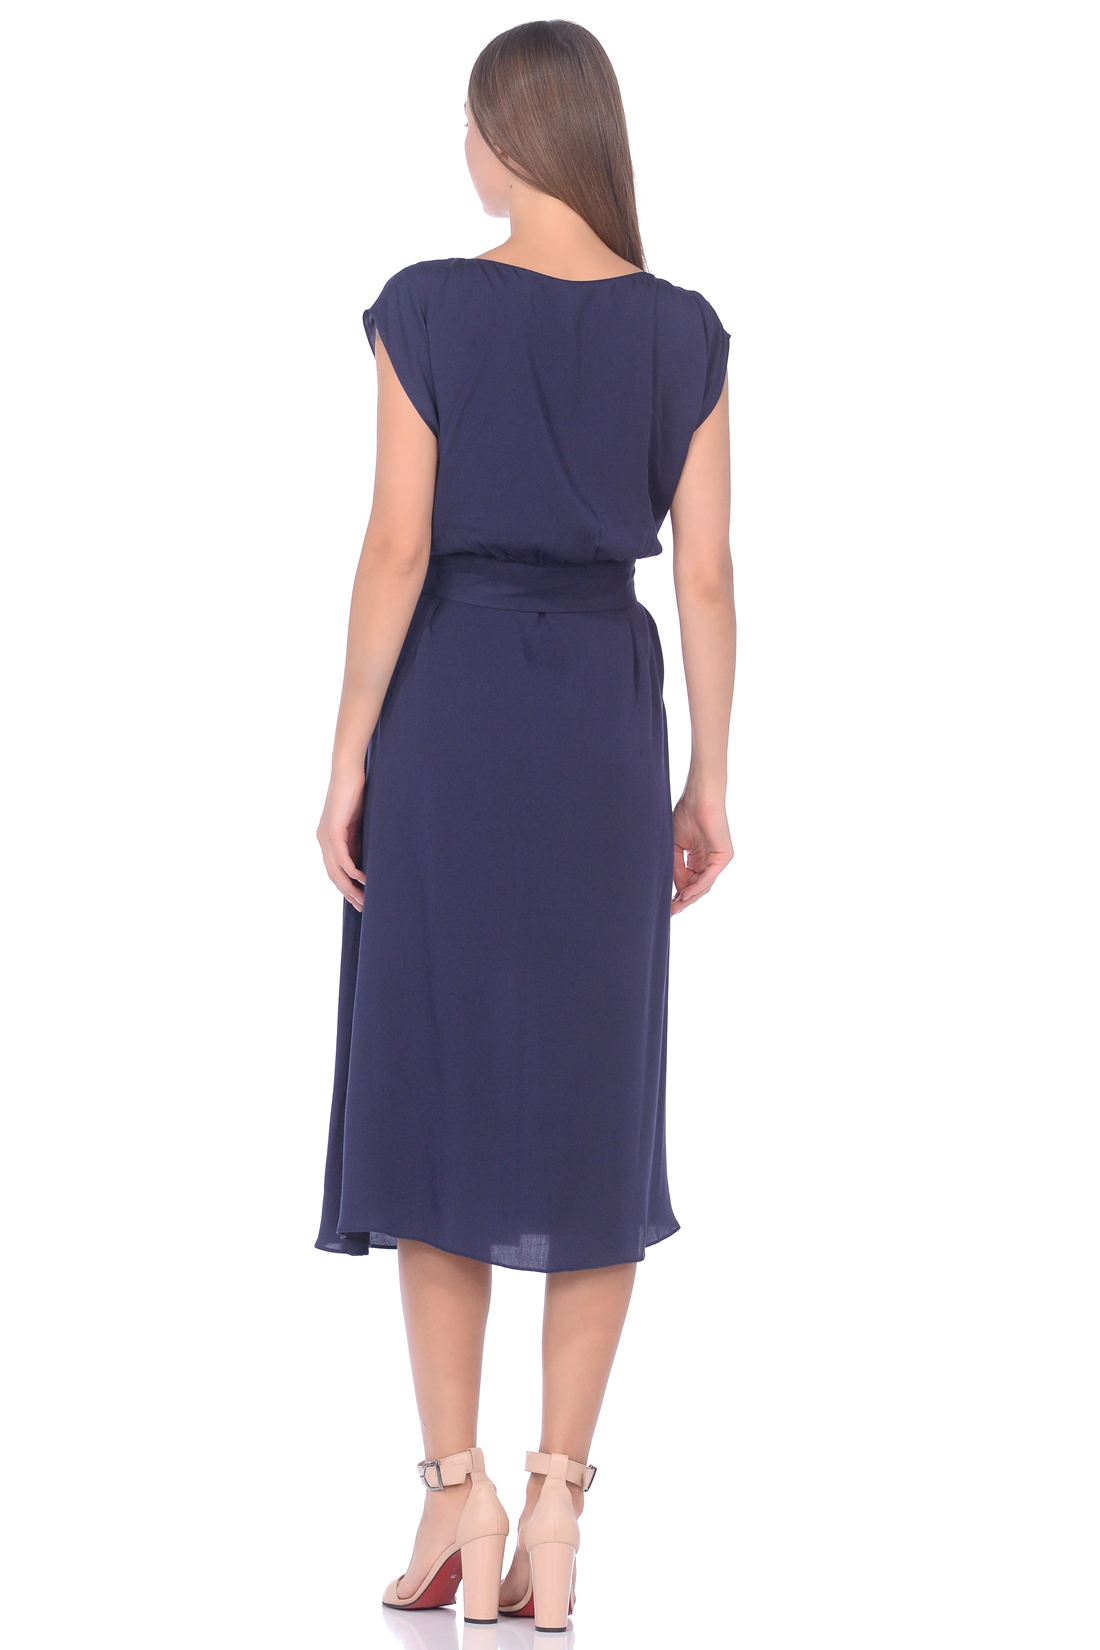 Платье с вшитым поясом (арт. baon B459066), размер L, цвет синий Платье с вшитым поясом (арт. baon B459066) - фото 2